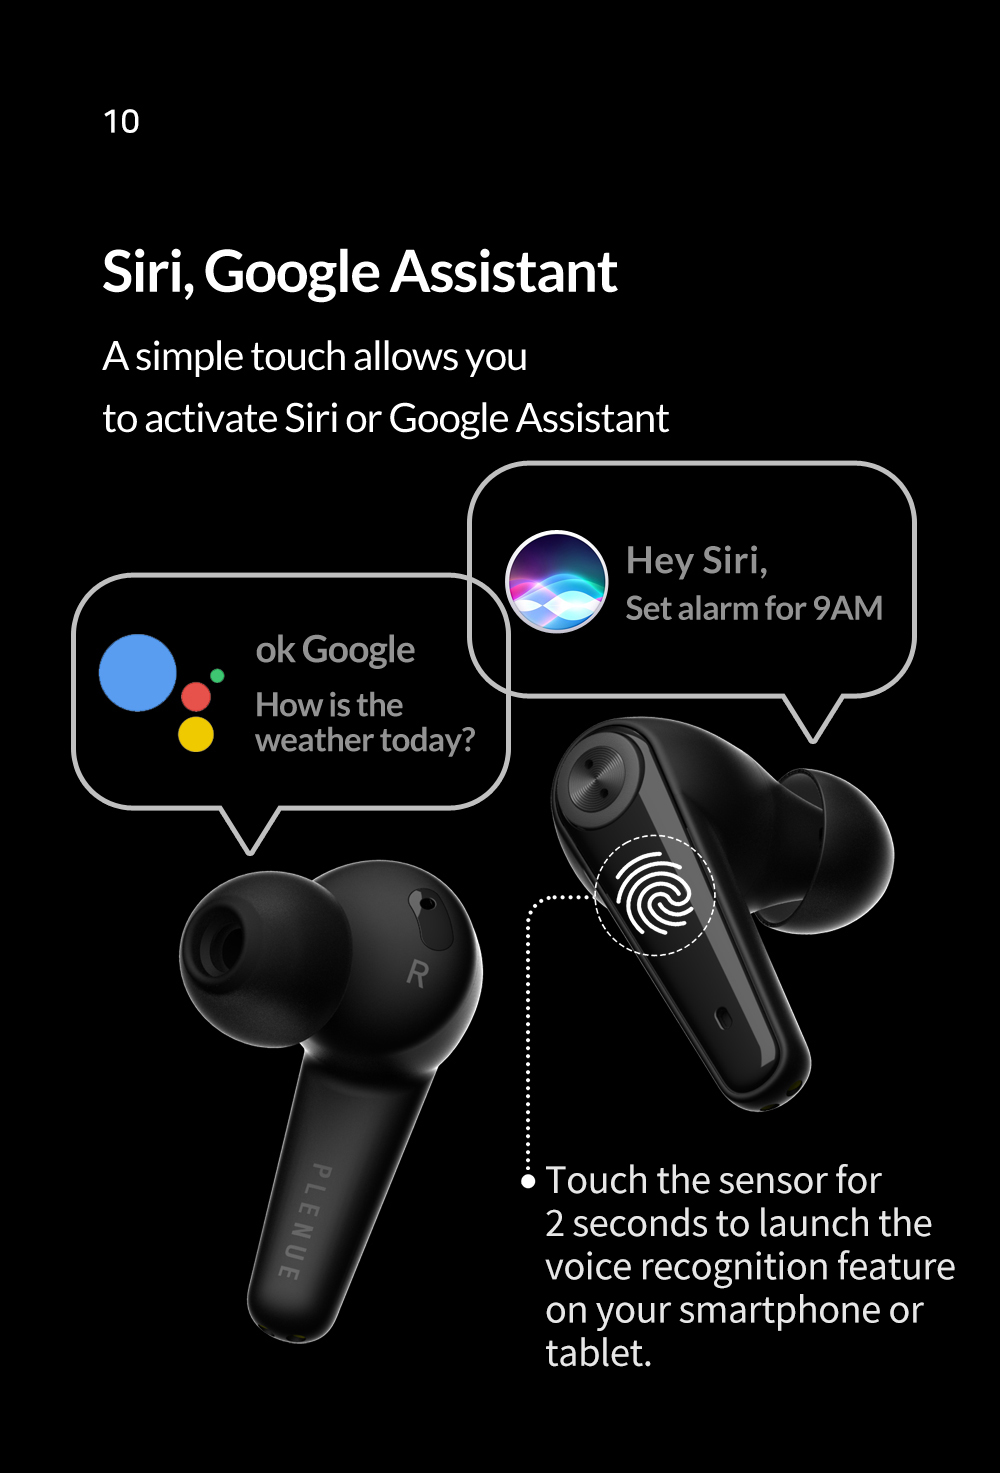 11. Siri, Google Assistant